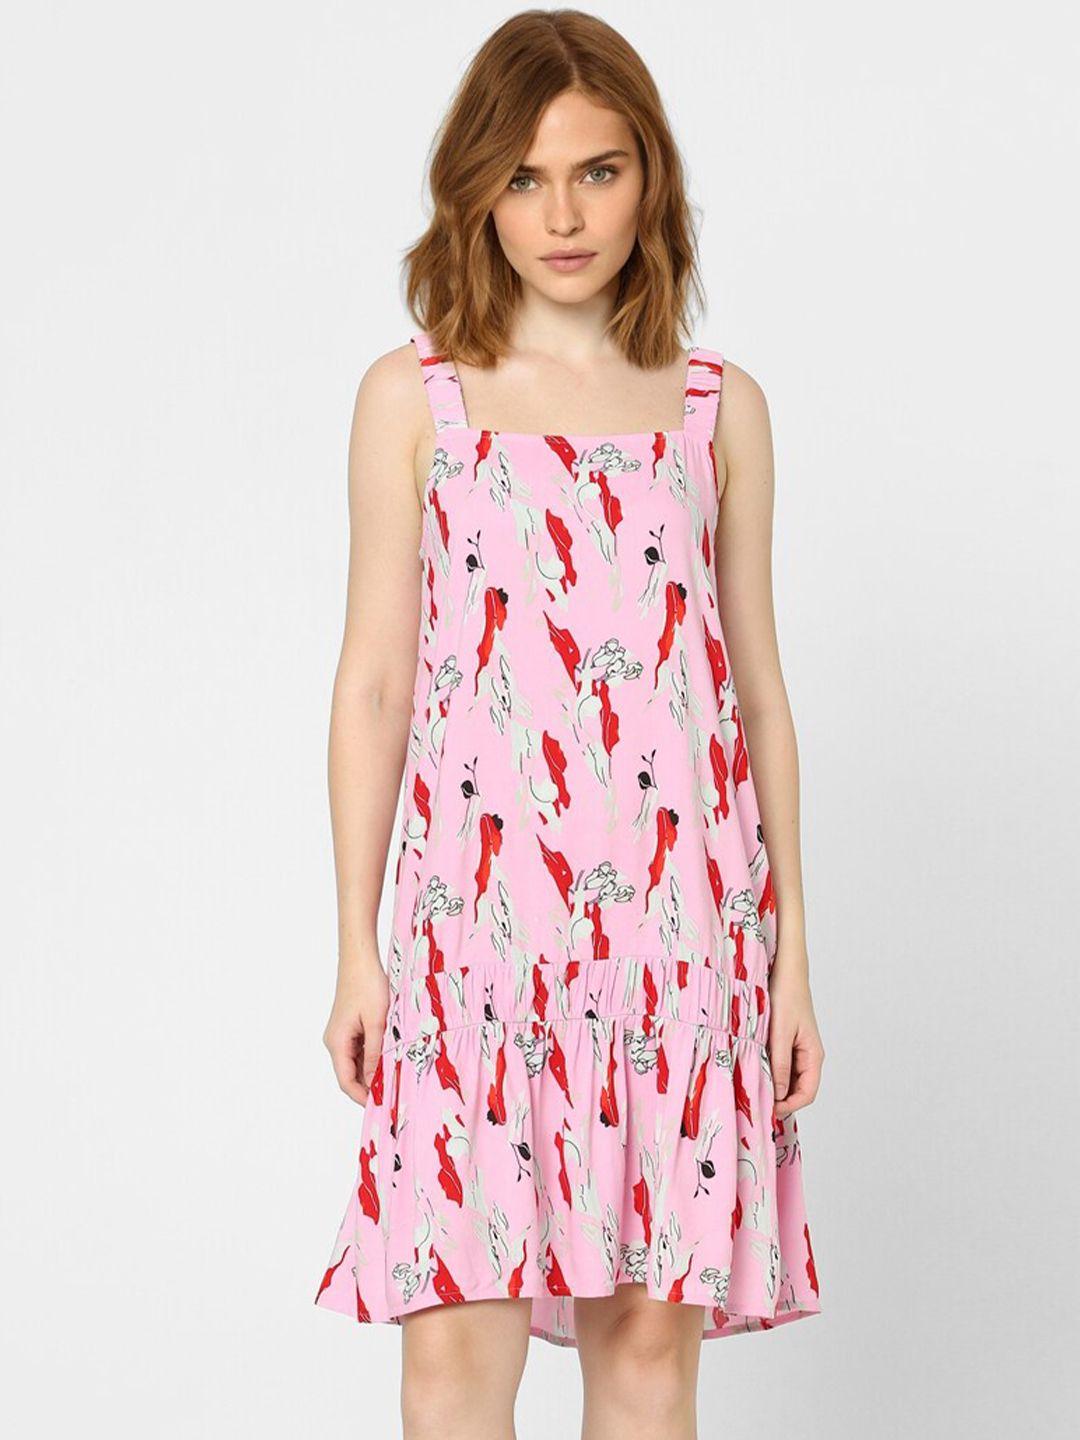 vero moda pink & classic rose floral drop-waist dress